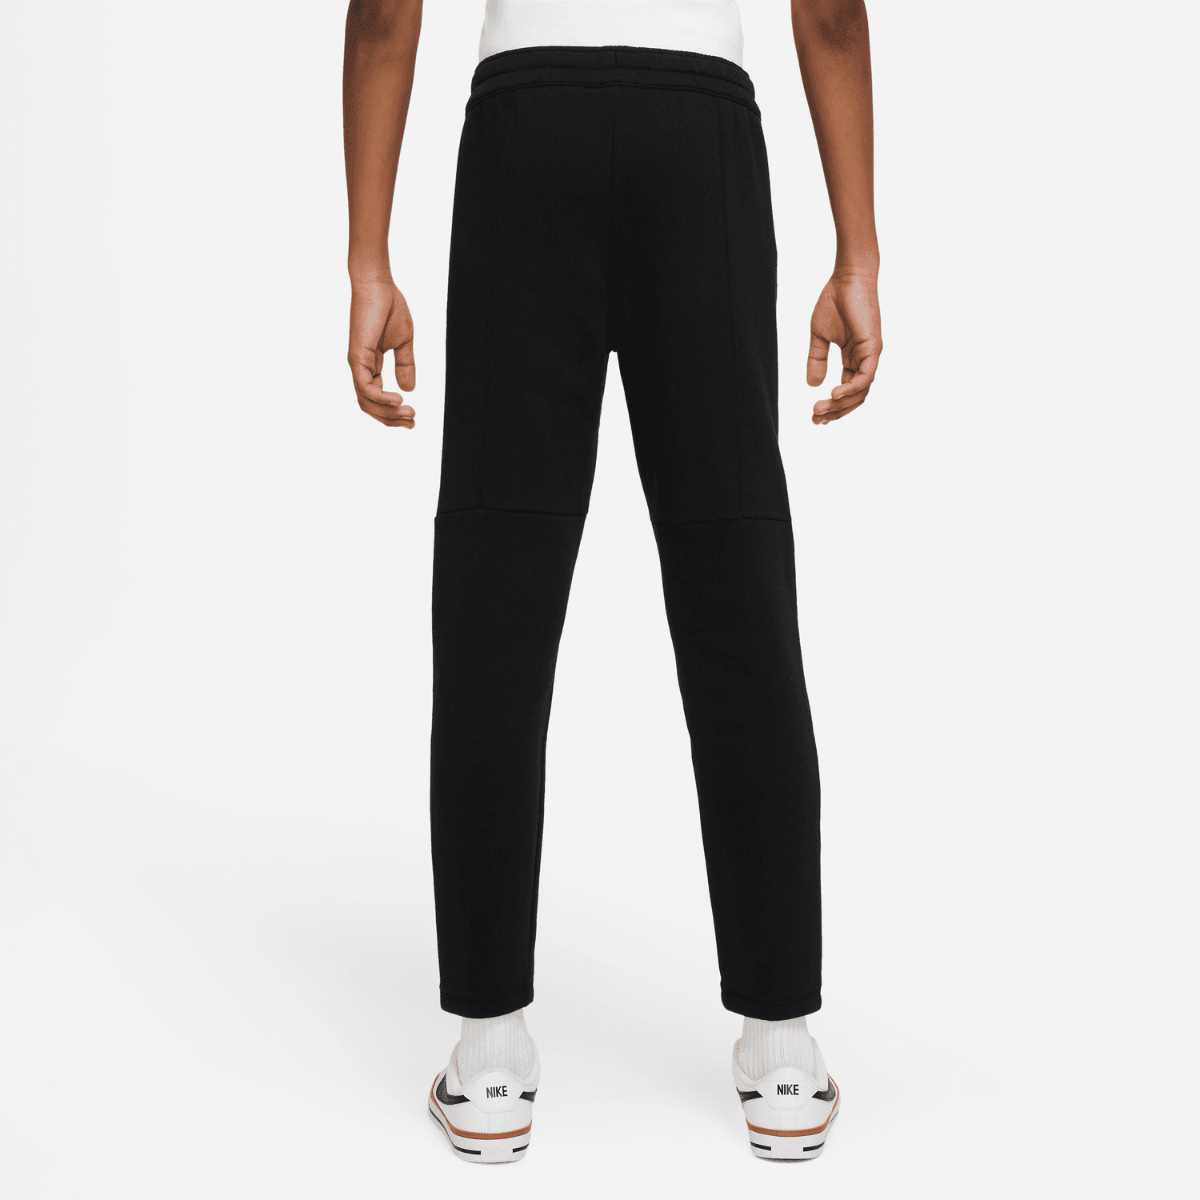 Pantalón Nike Sportswear Amplify Junior - Negro/Blanco